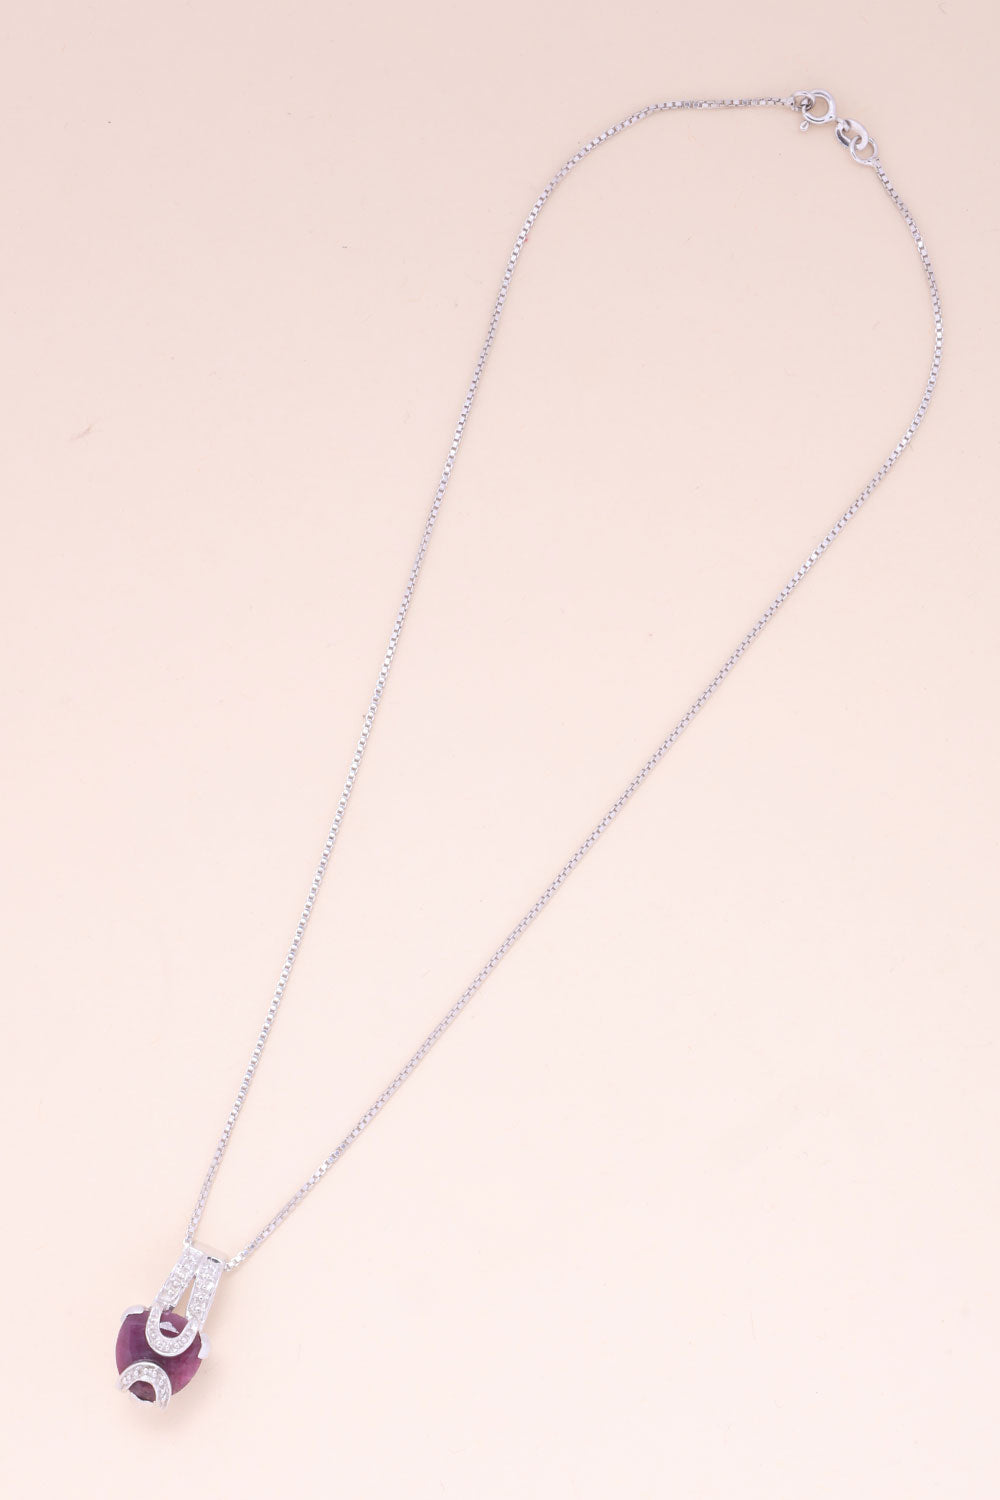 Silver Necklace Pendant Ruby Chain 10067183 - Avishya